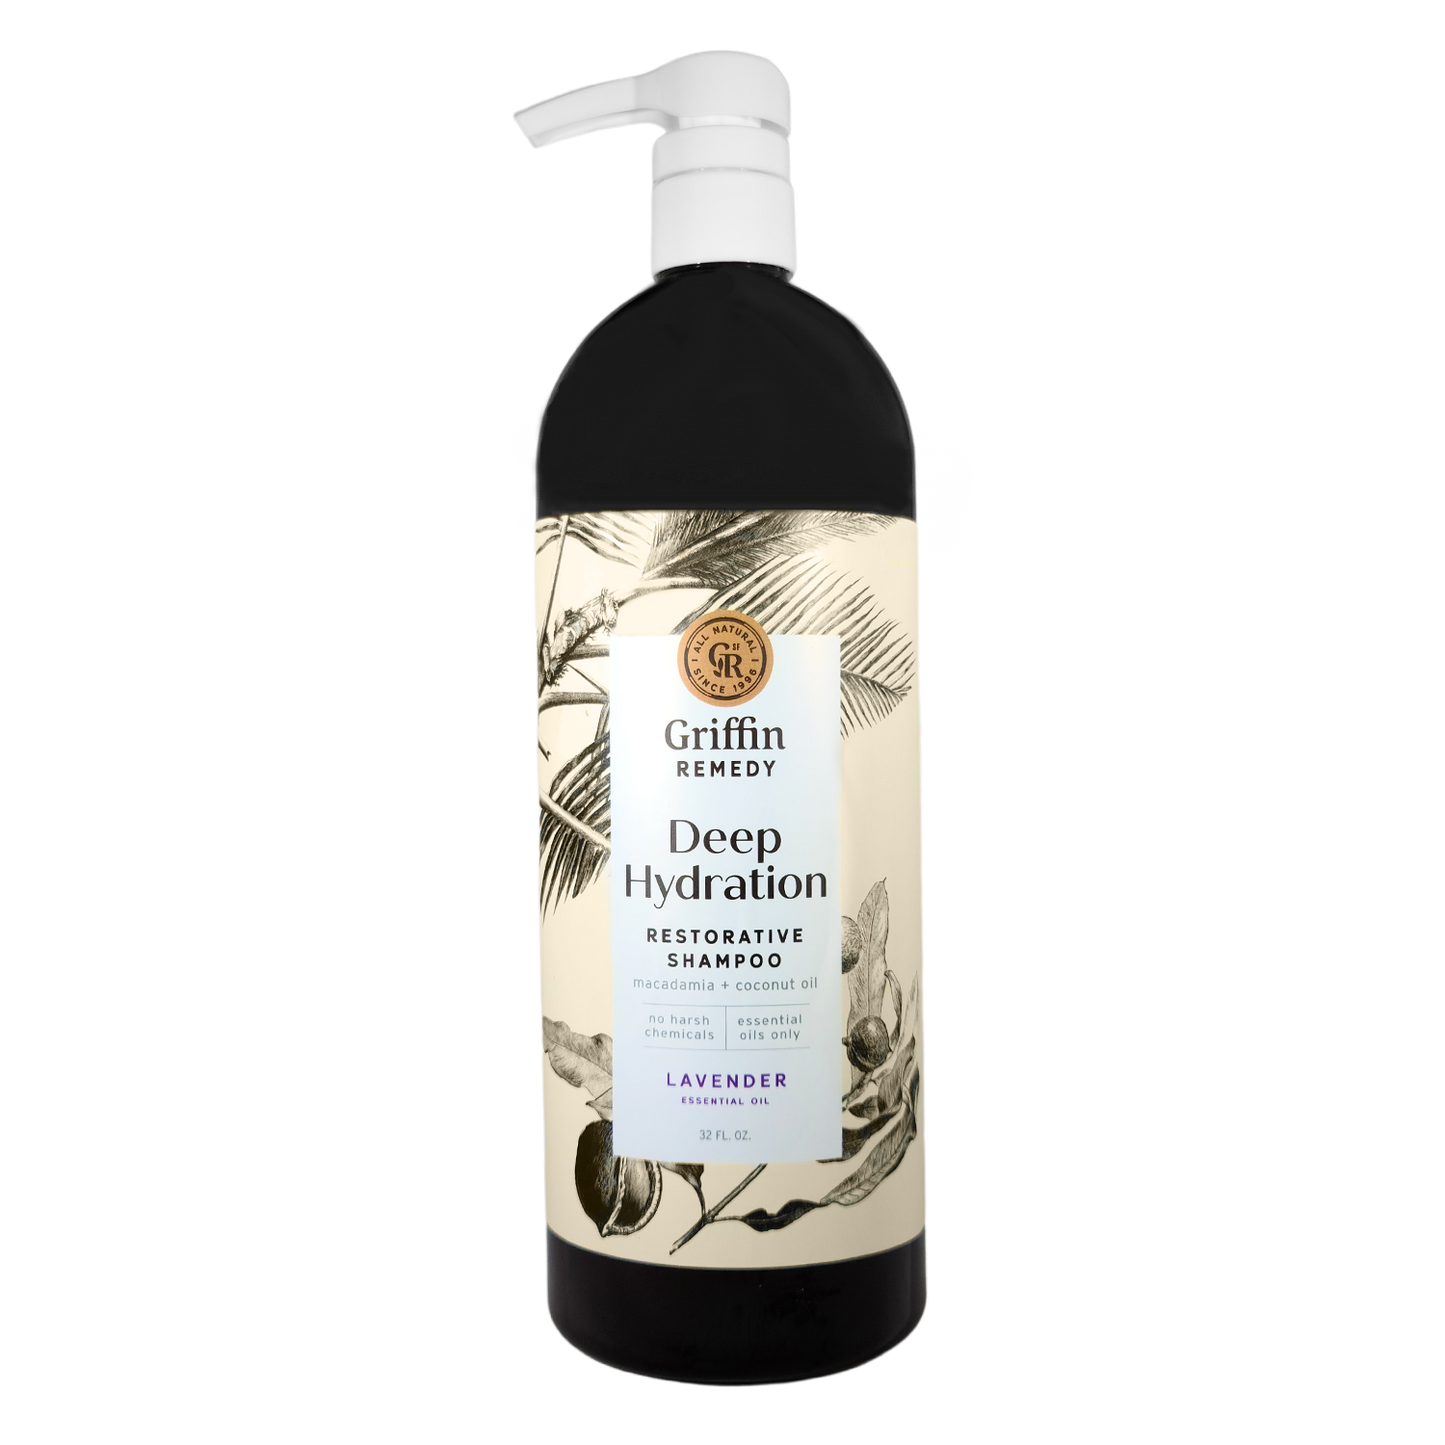 Deep Hydration Restorative Shampoo